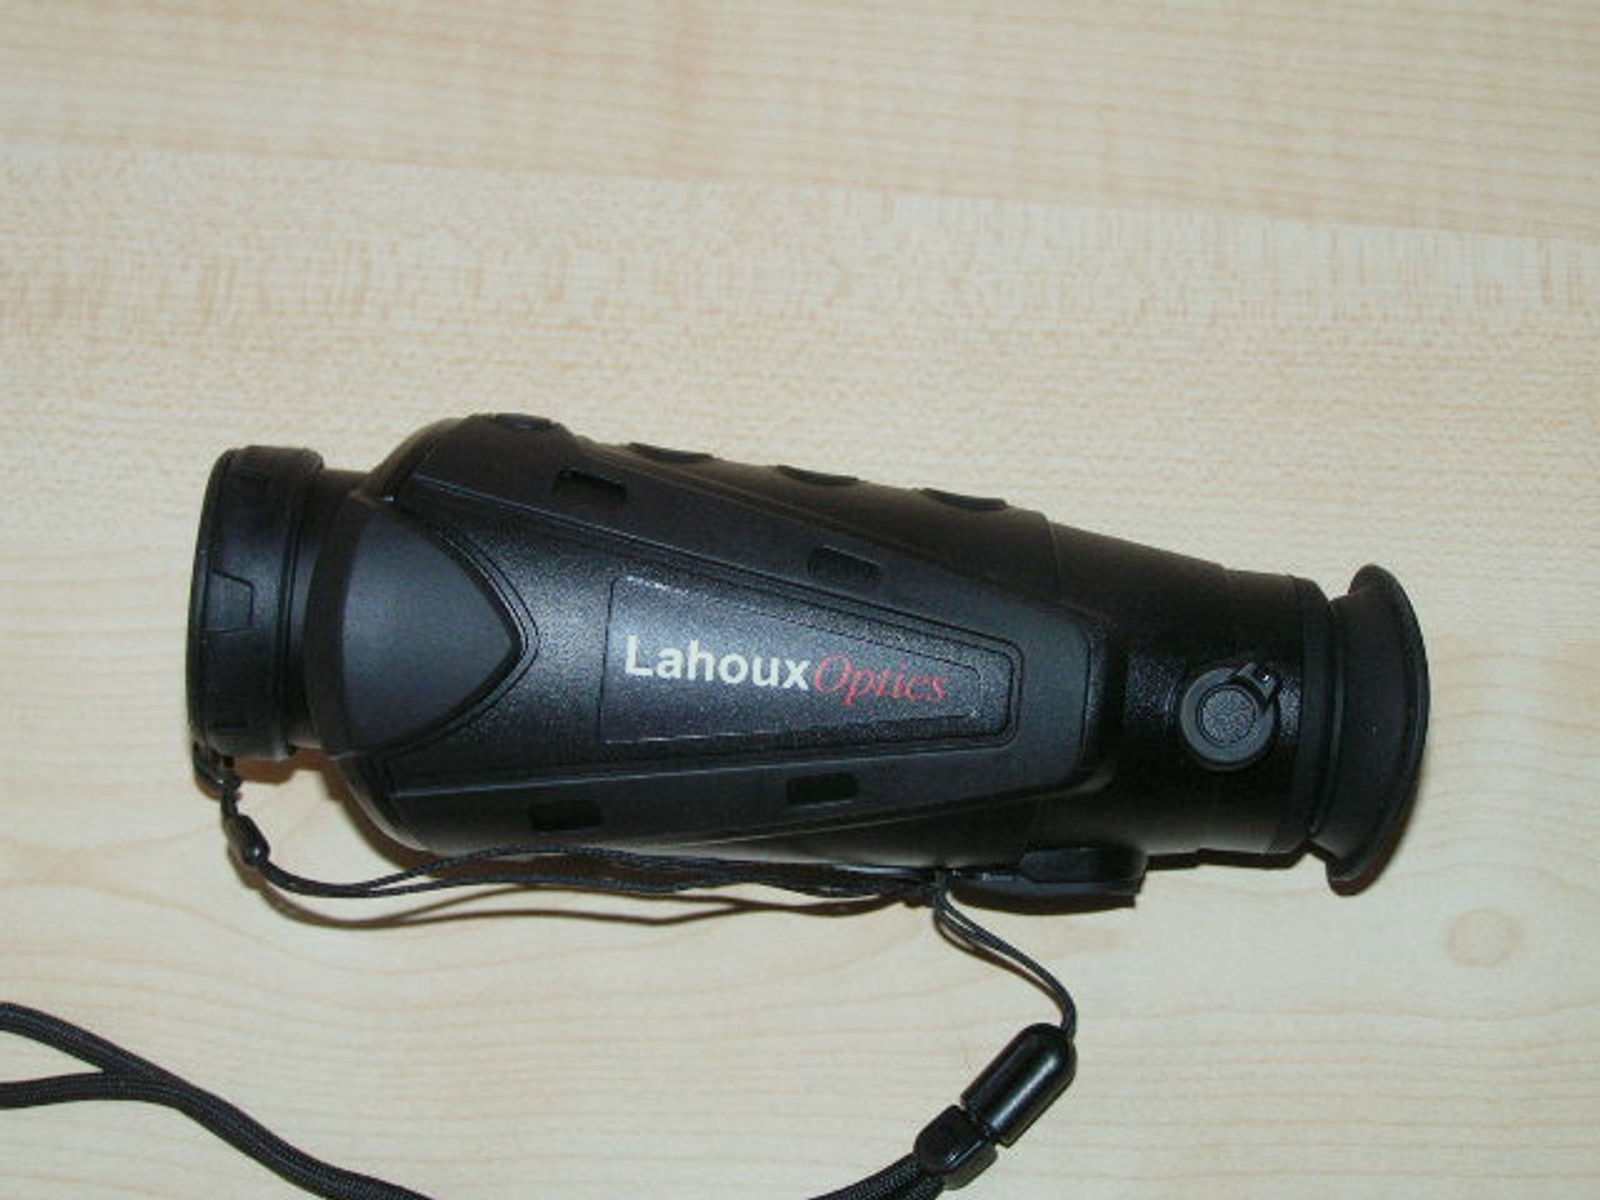 Lahoux Optics	 Spotter Pro V